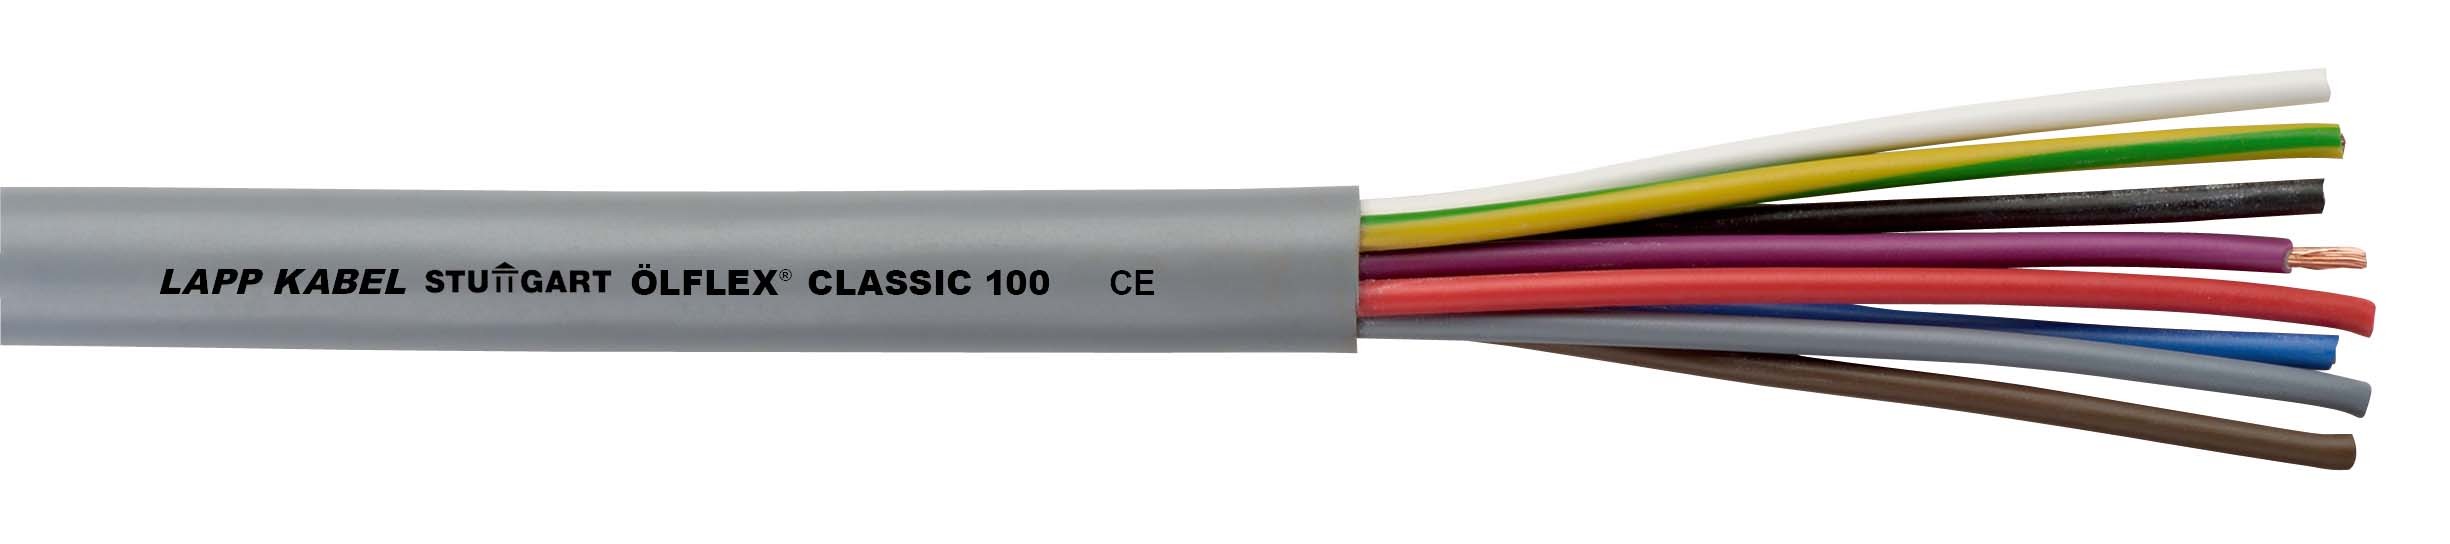 ÖLFLEX CLASSIC 100 5G16 00101133 T500 